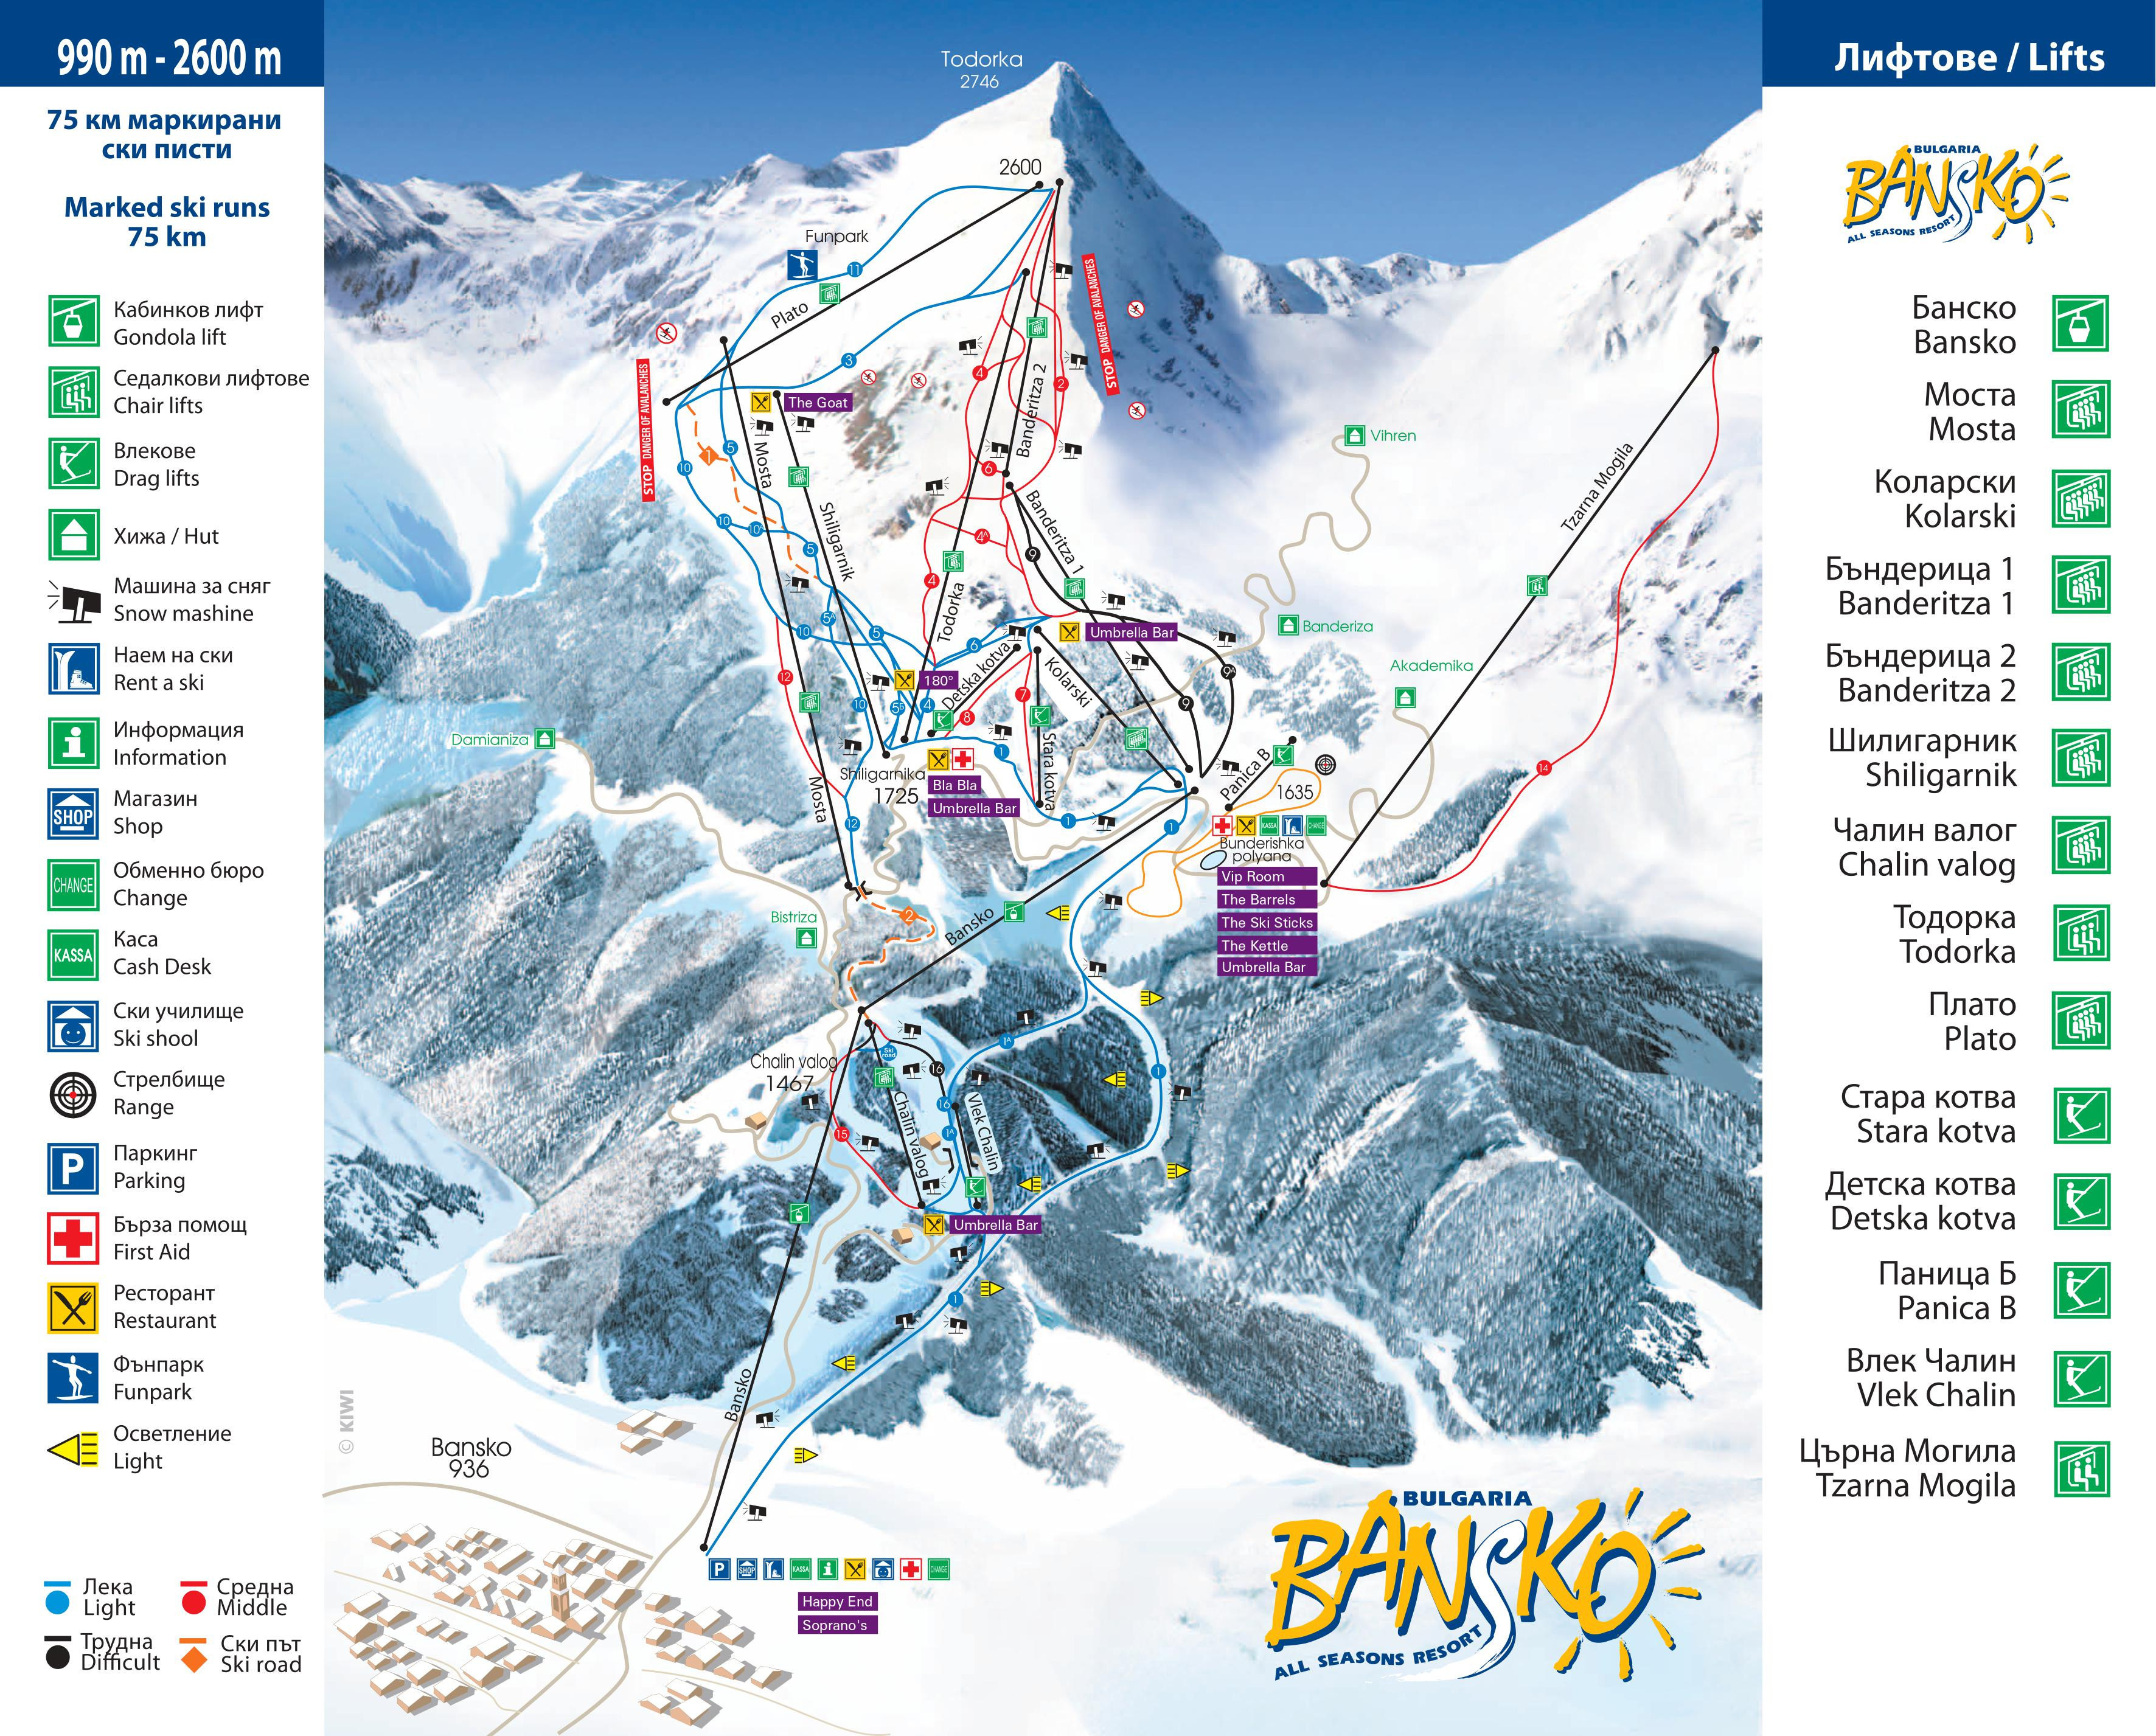 ski-resort_bansko_n5336-136567-1_raw.jpg